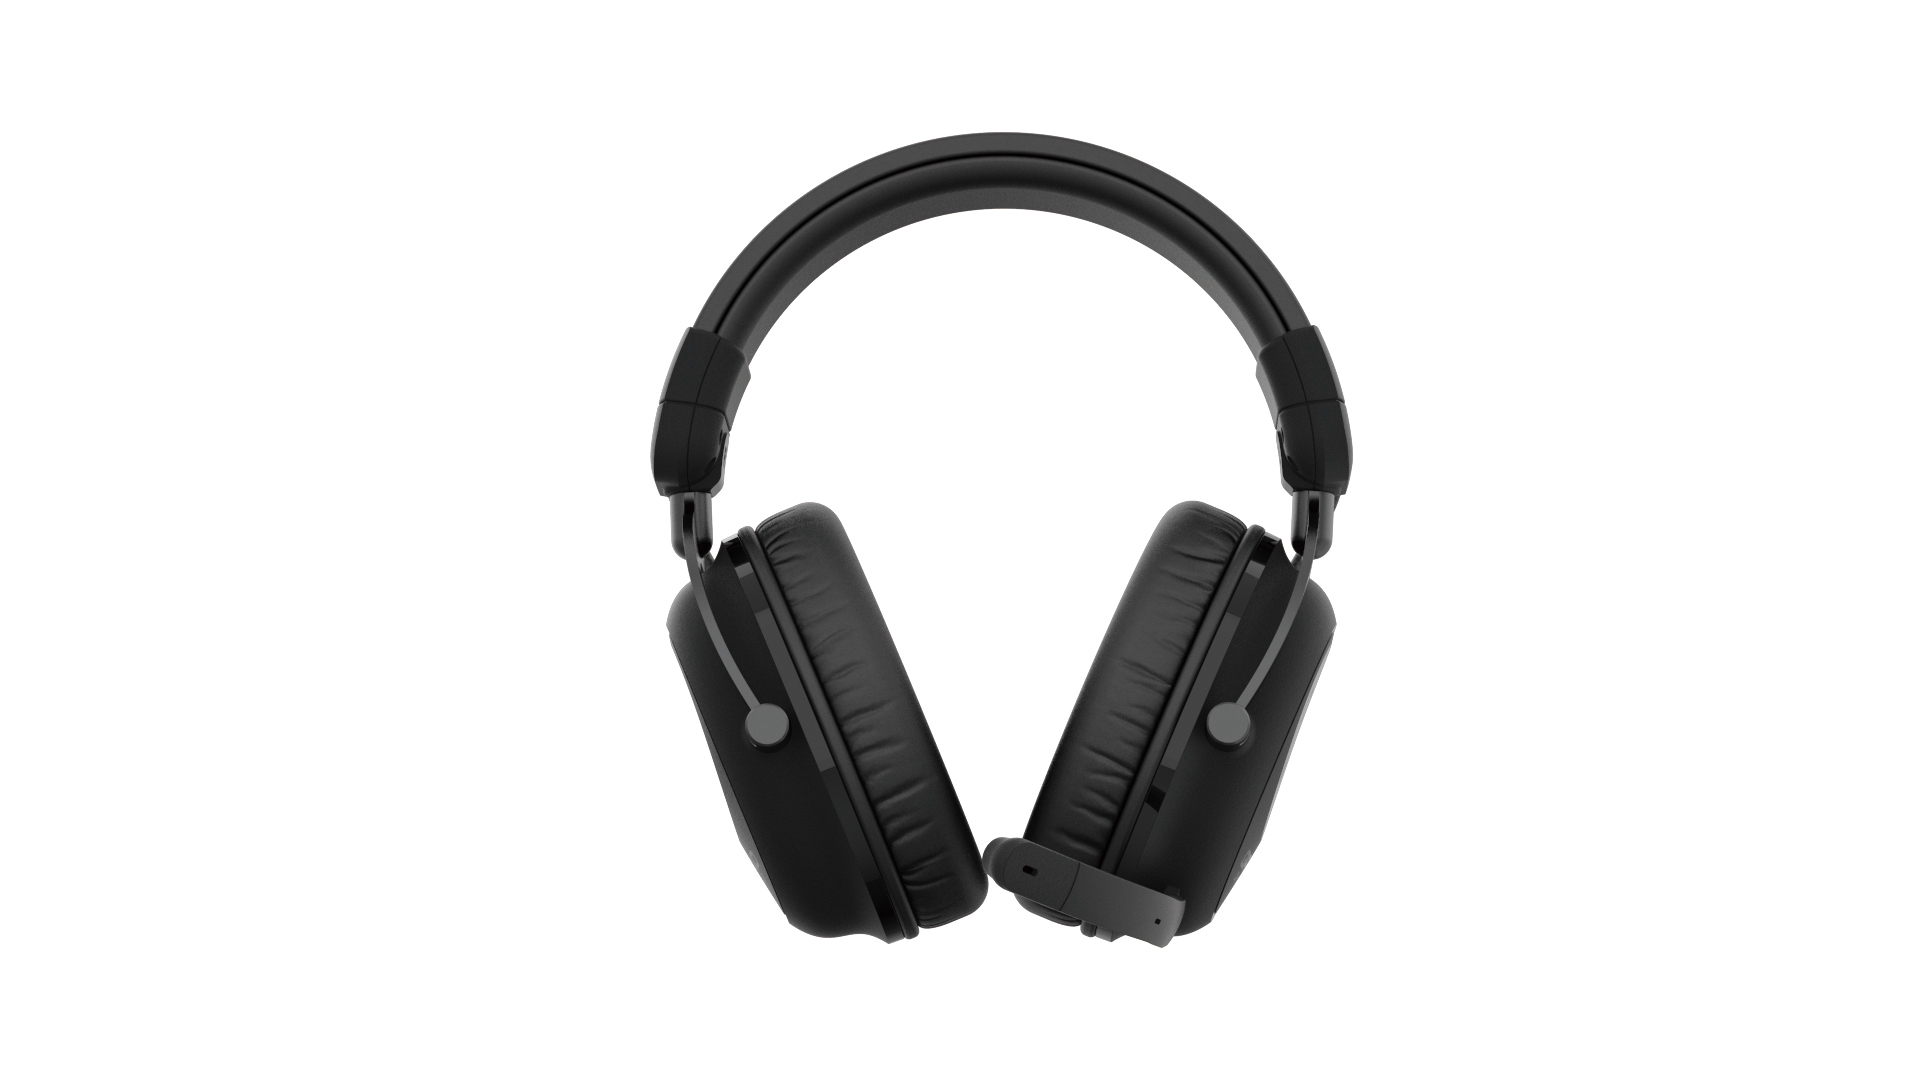 QPAD QPAD®|QH900, Over-ear Bluetooth Gaming Schwarz Headset